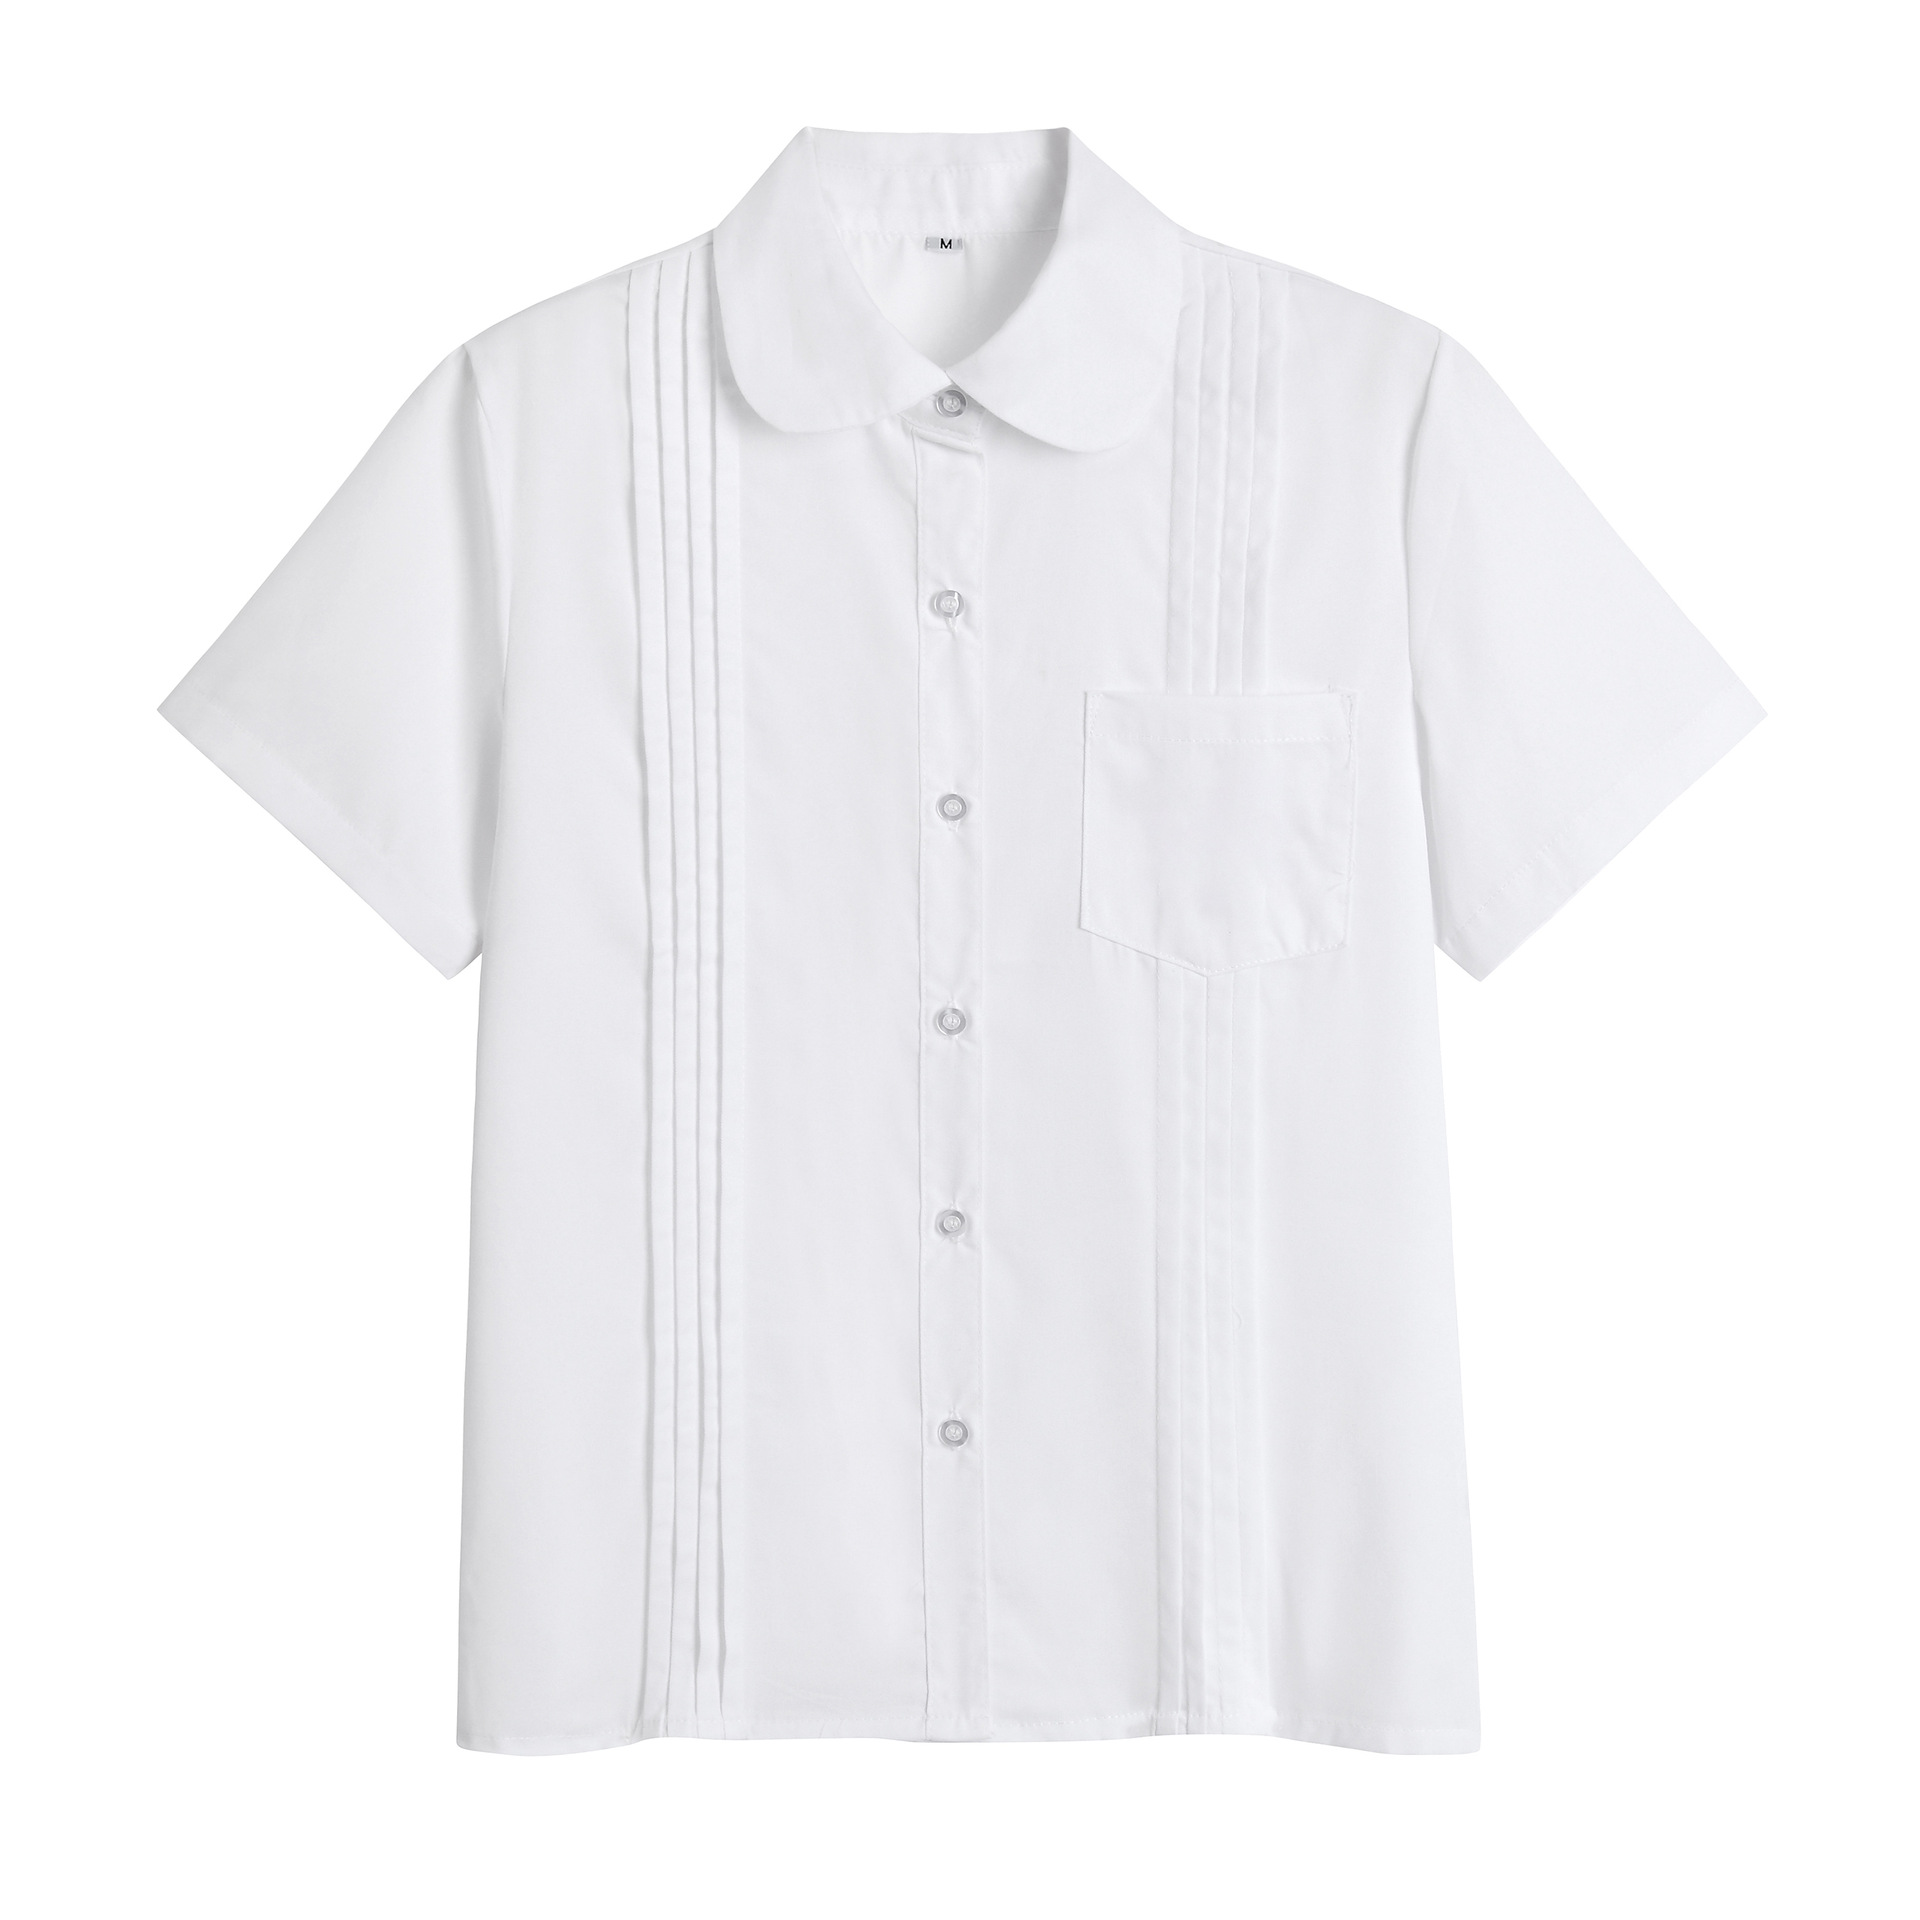 Wholesale Kids Short Sleeve Students School Uniform Shirt Set Boys′ Girls' White Non-Iron School Shirts